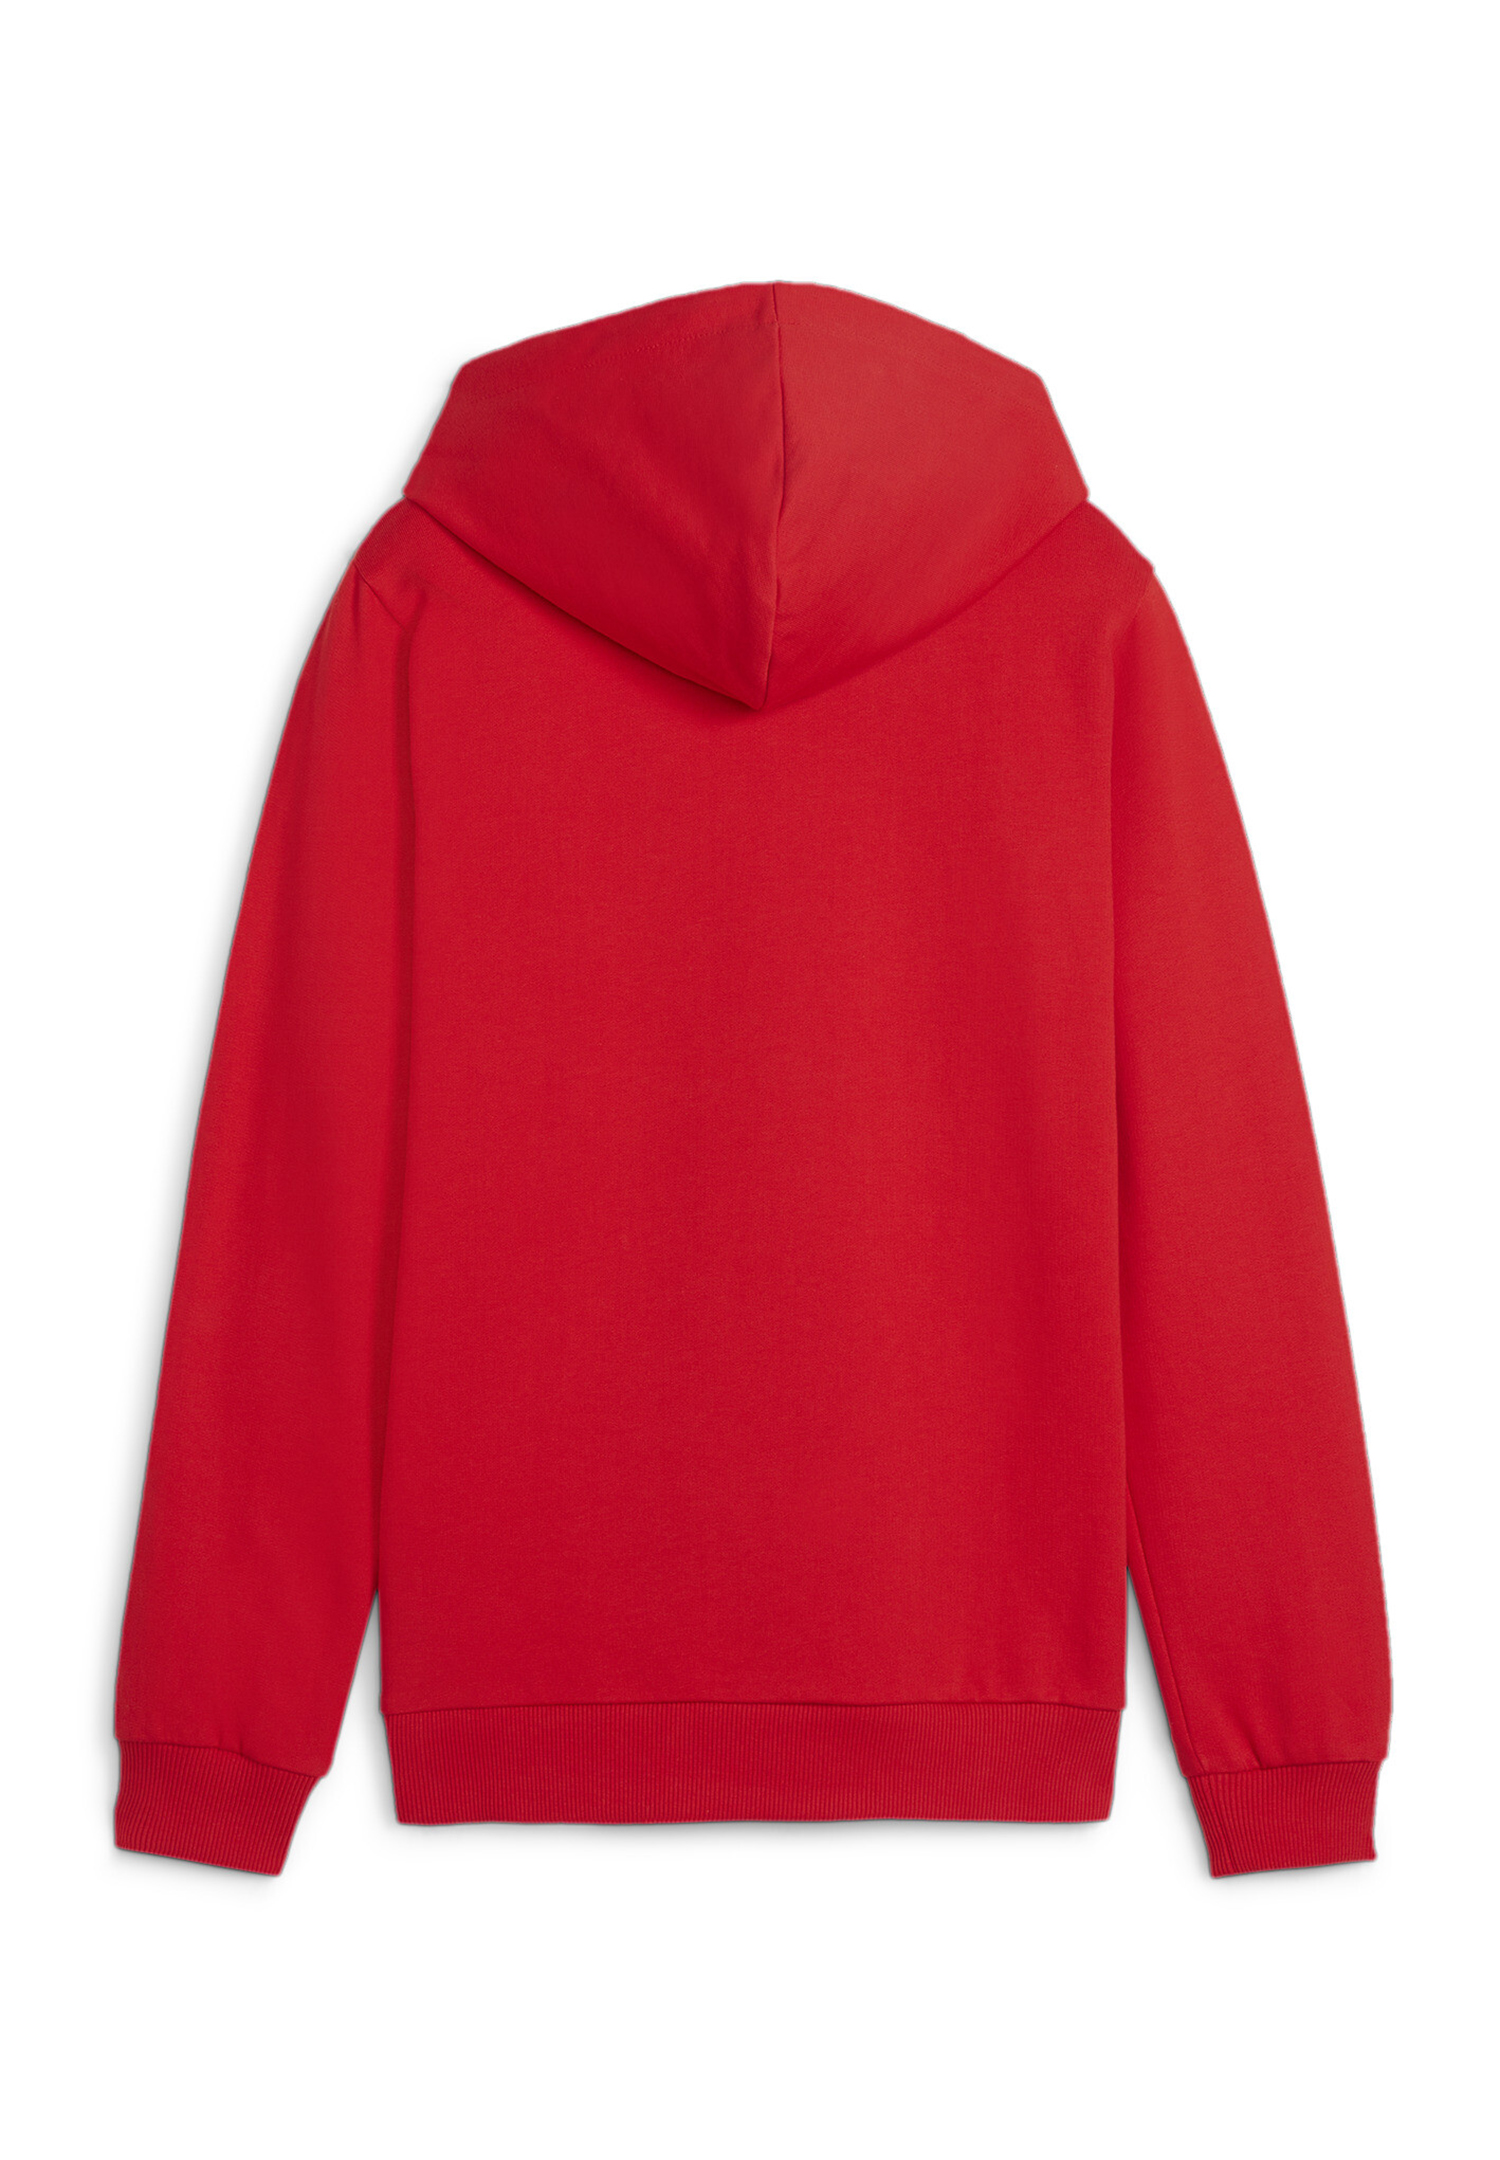 PUMA Kinder teamGOAL Casuals Hoody Sweatshirt Pullover 658619 rot 